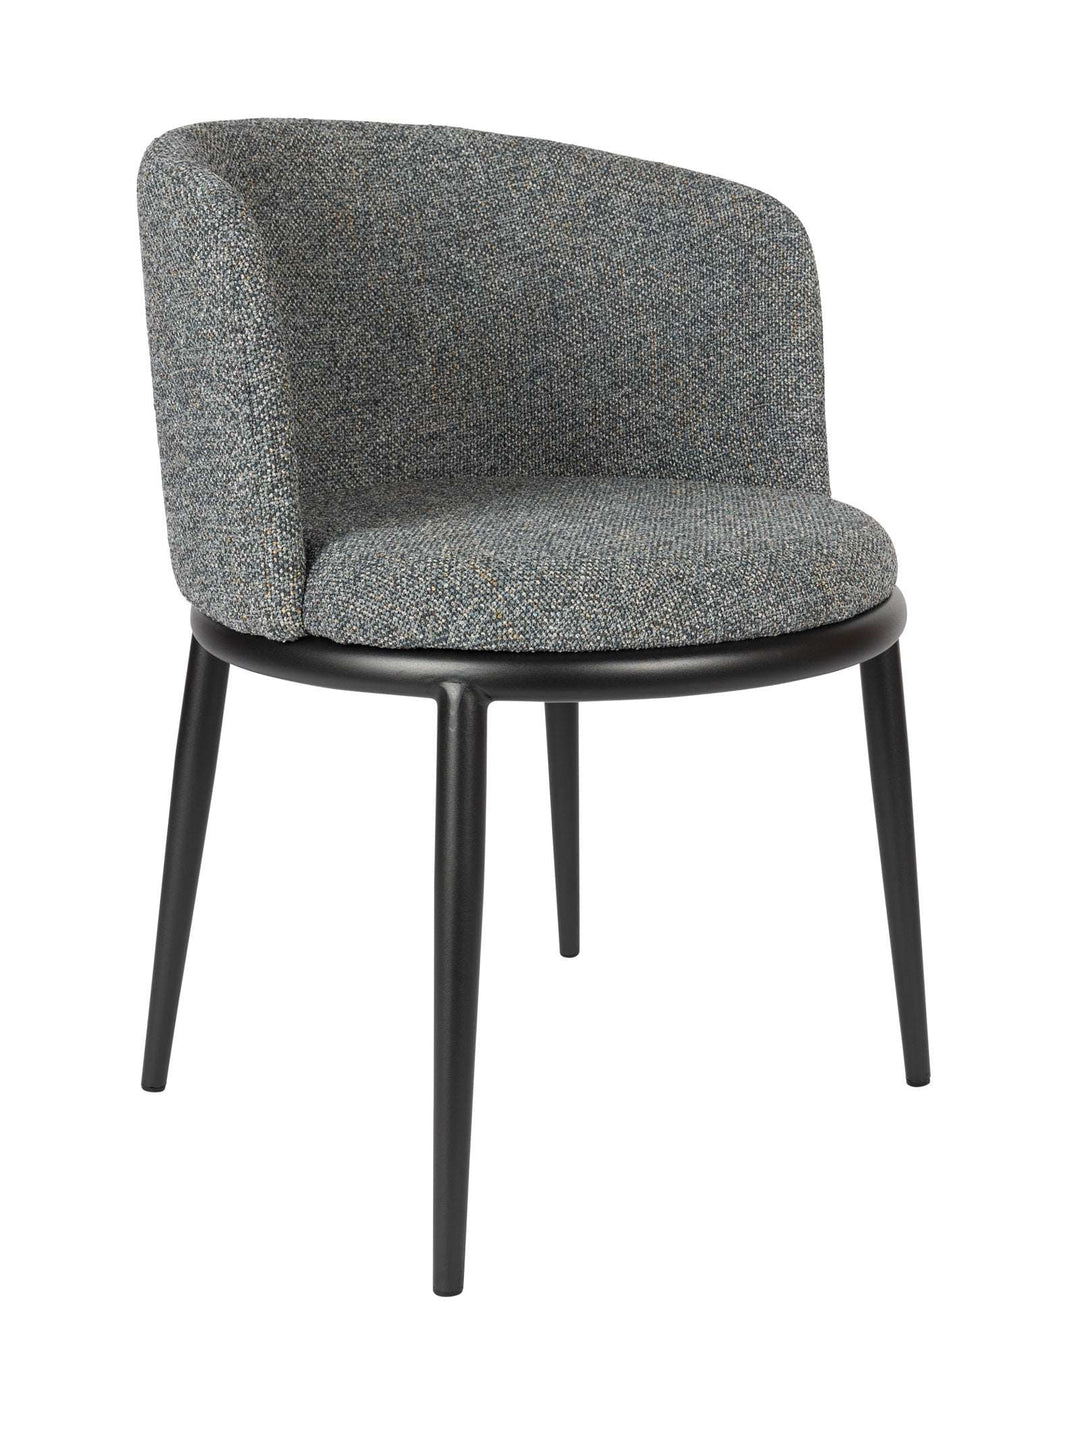 Chelsea Chair - Hertex Haus Online - Furniture